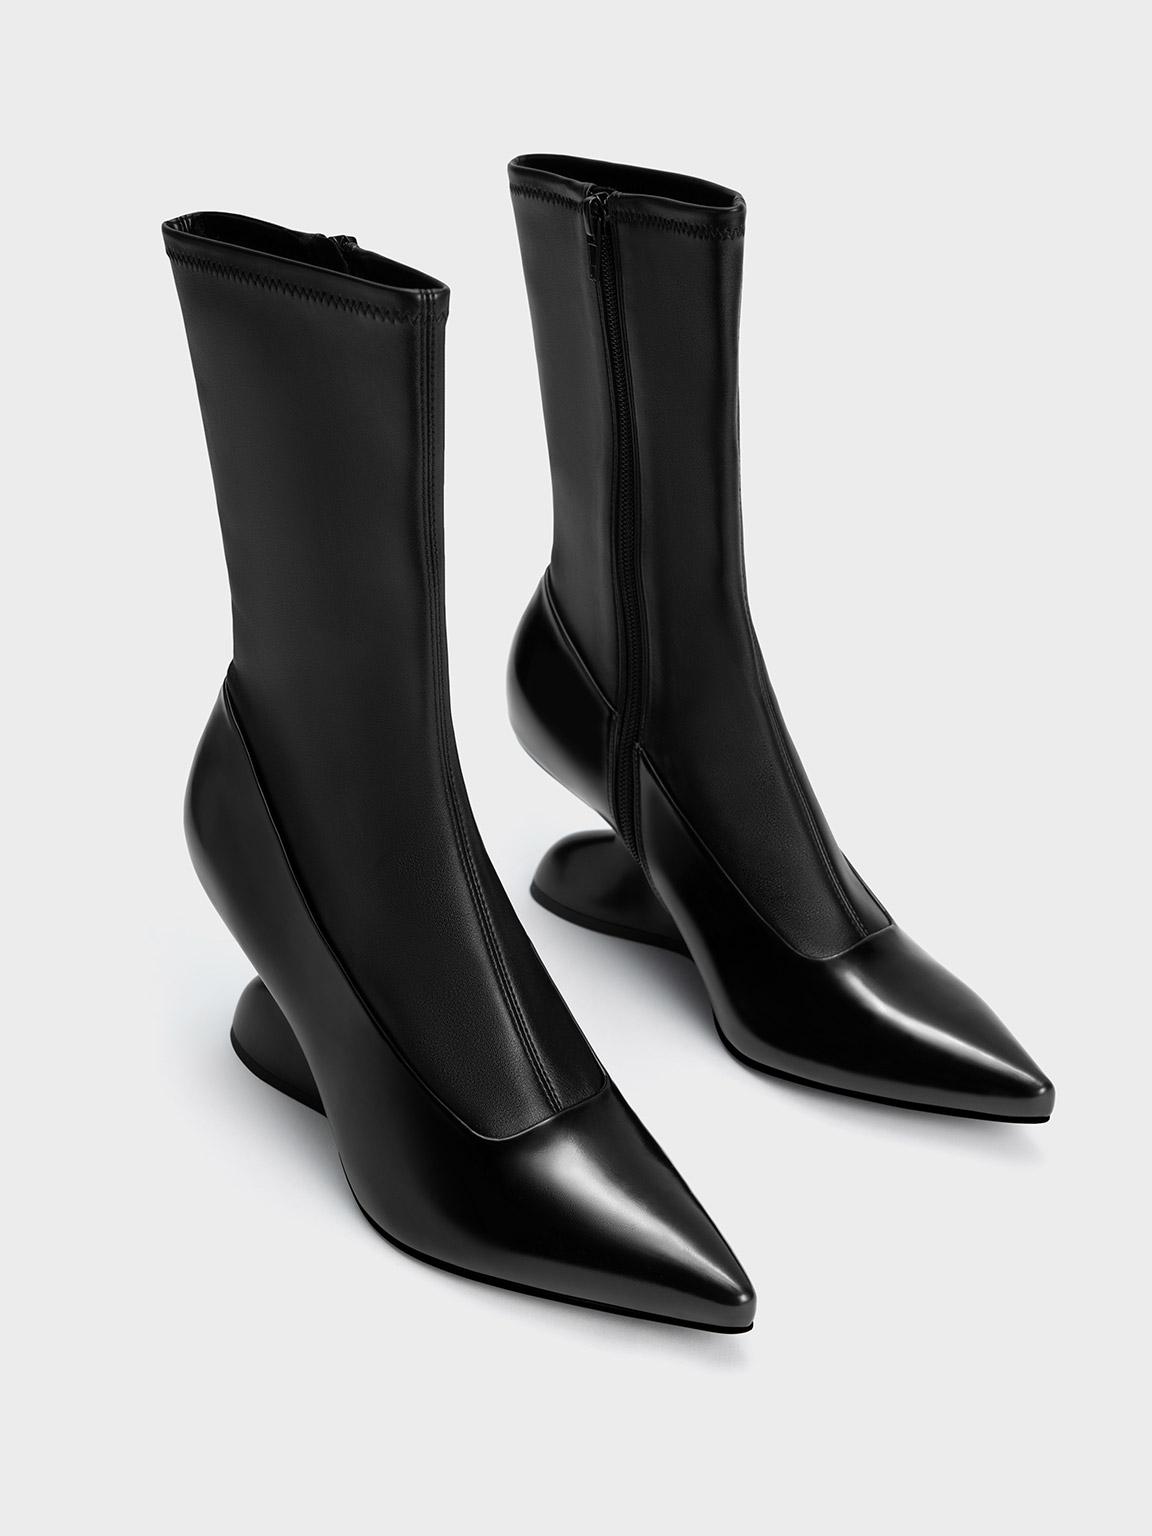 Charles & Keith - Women's Platform Block Heel Ankle Boots, Dark Brown, US 6